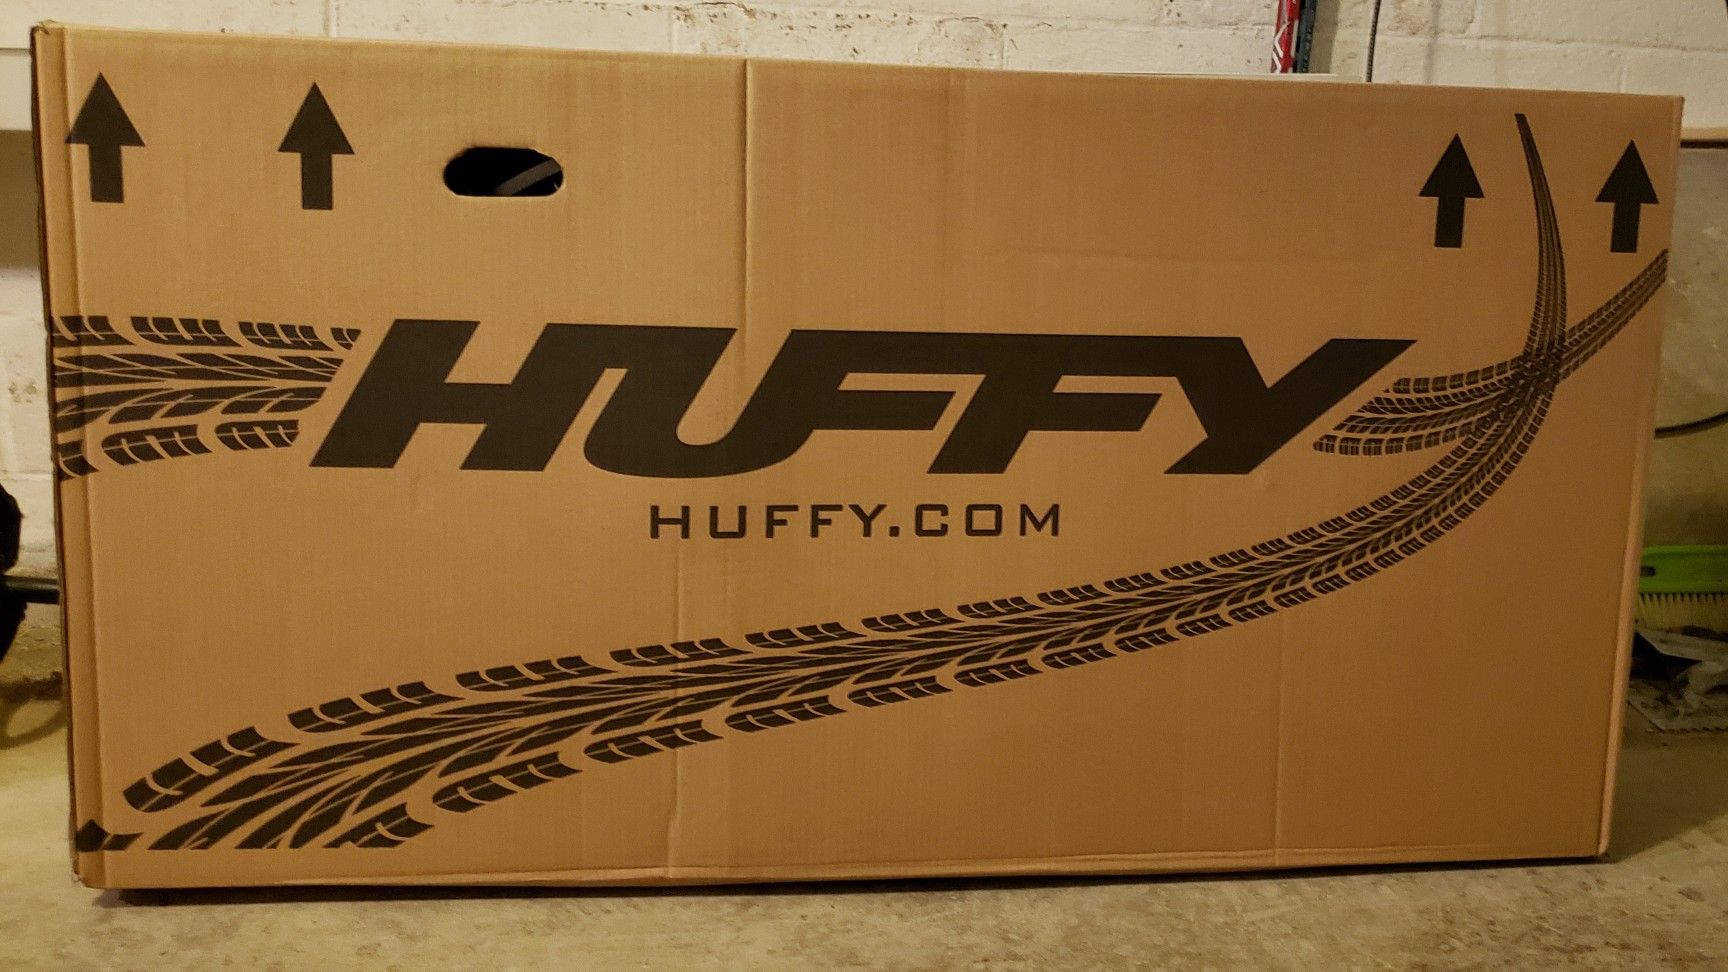 26" Mens Huffy Mountain Bike - Brand New In Box